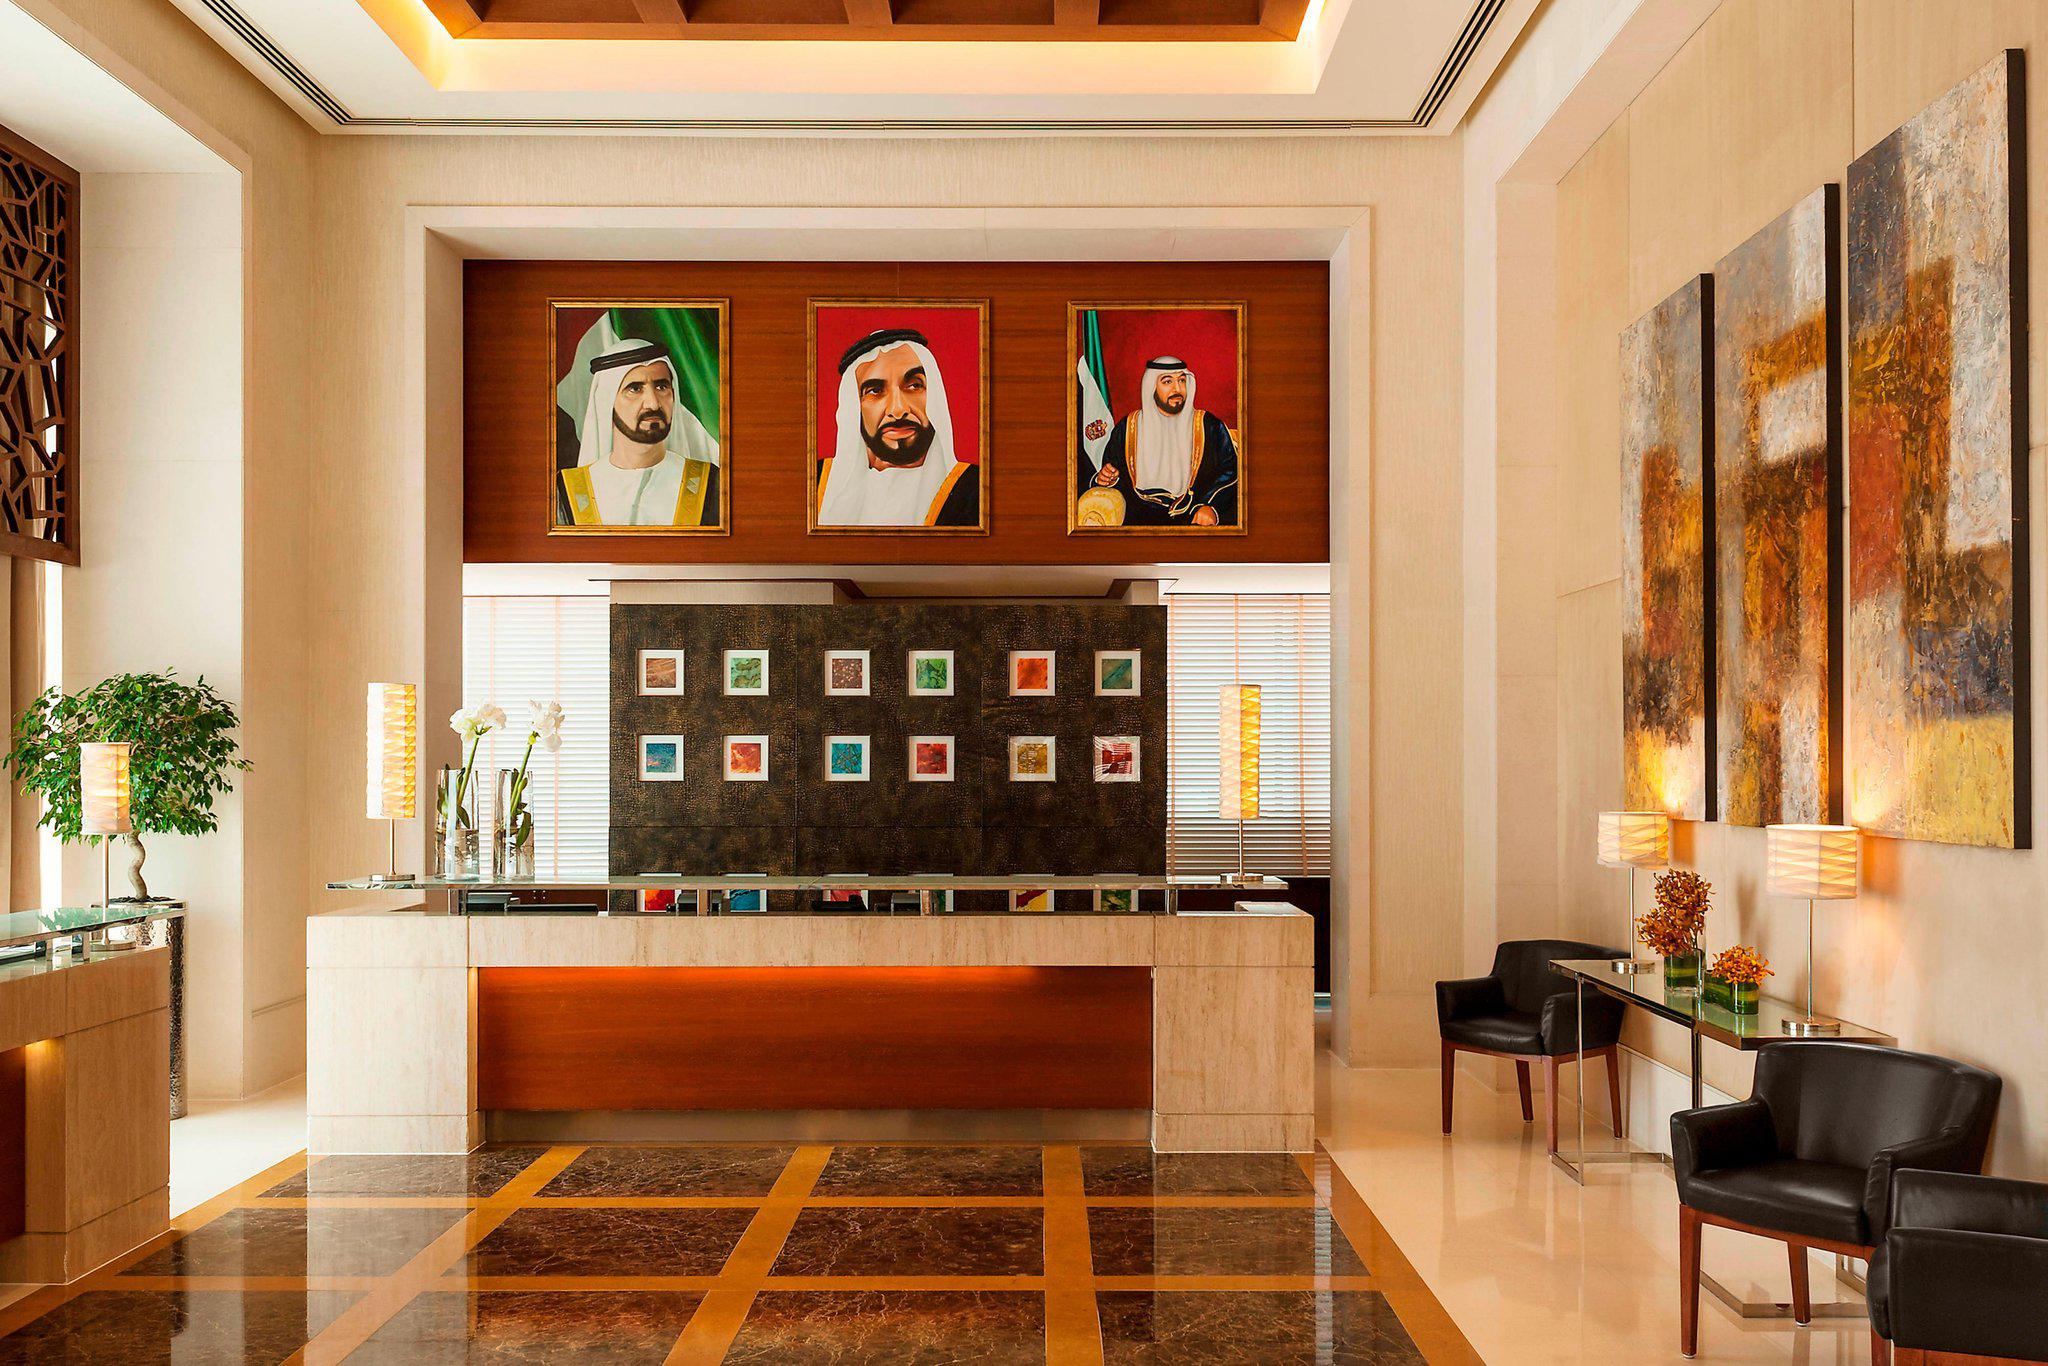 Four Points by Sheraton Sheikh Zayed Road, Dubai